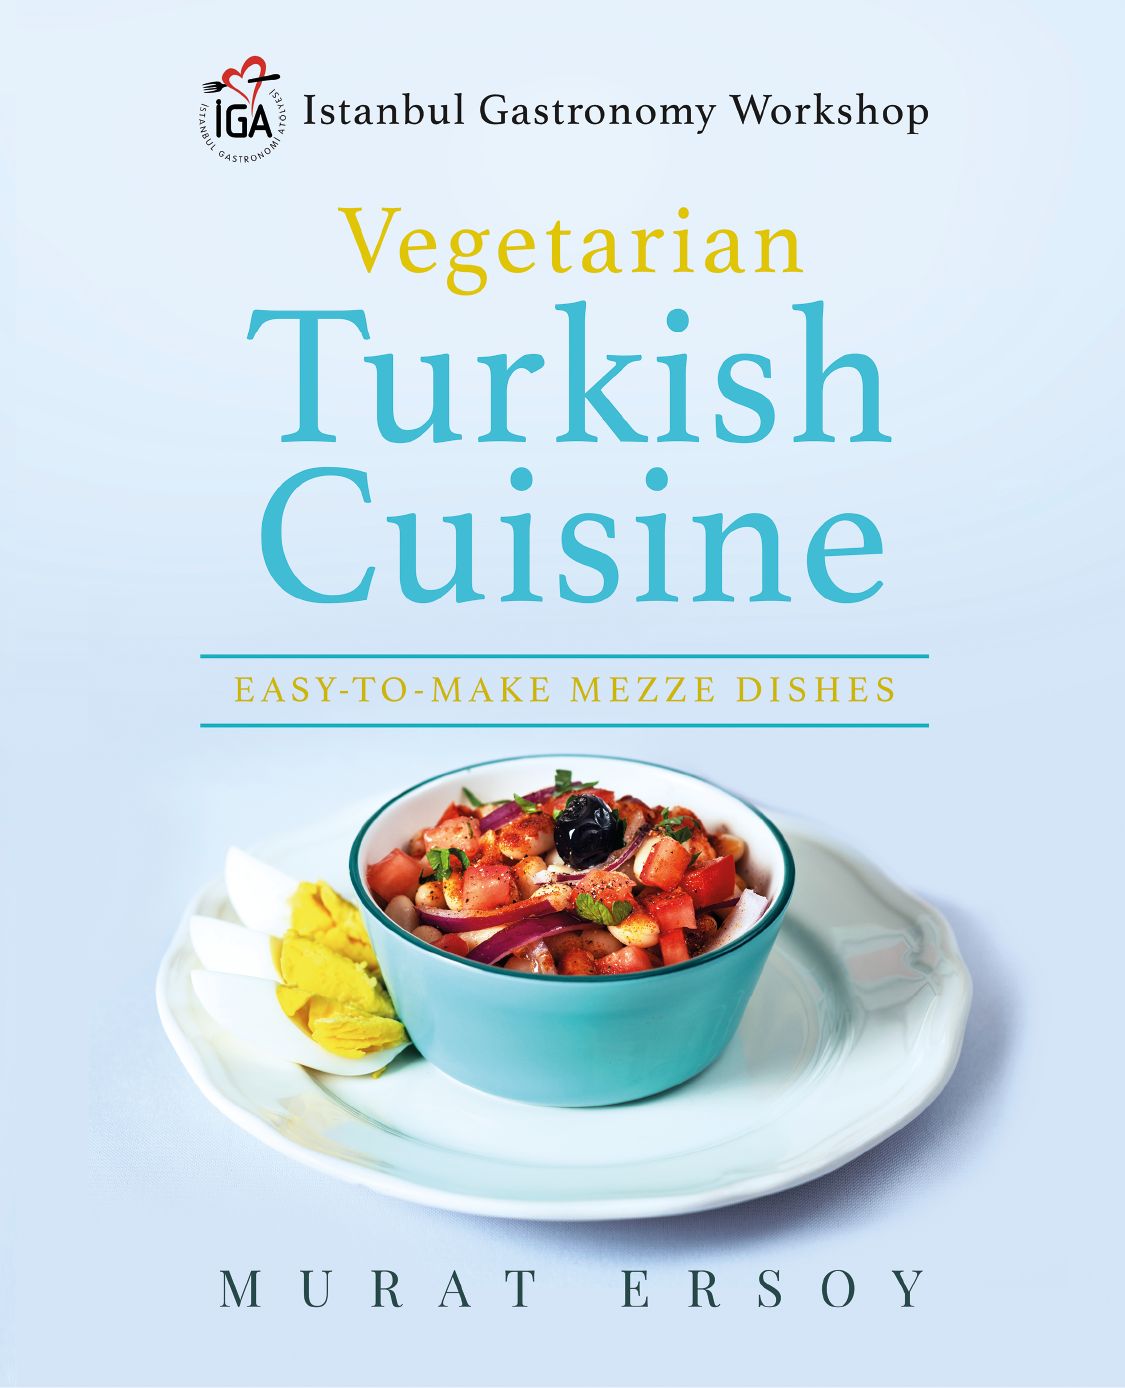 IGA Vegetarian Turkish Cuisine EASY-TO-MAKE MEZZE DISHES - photo 1